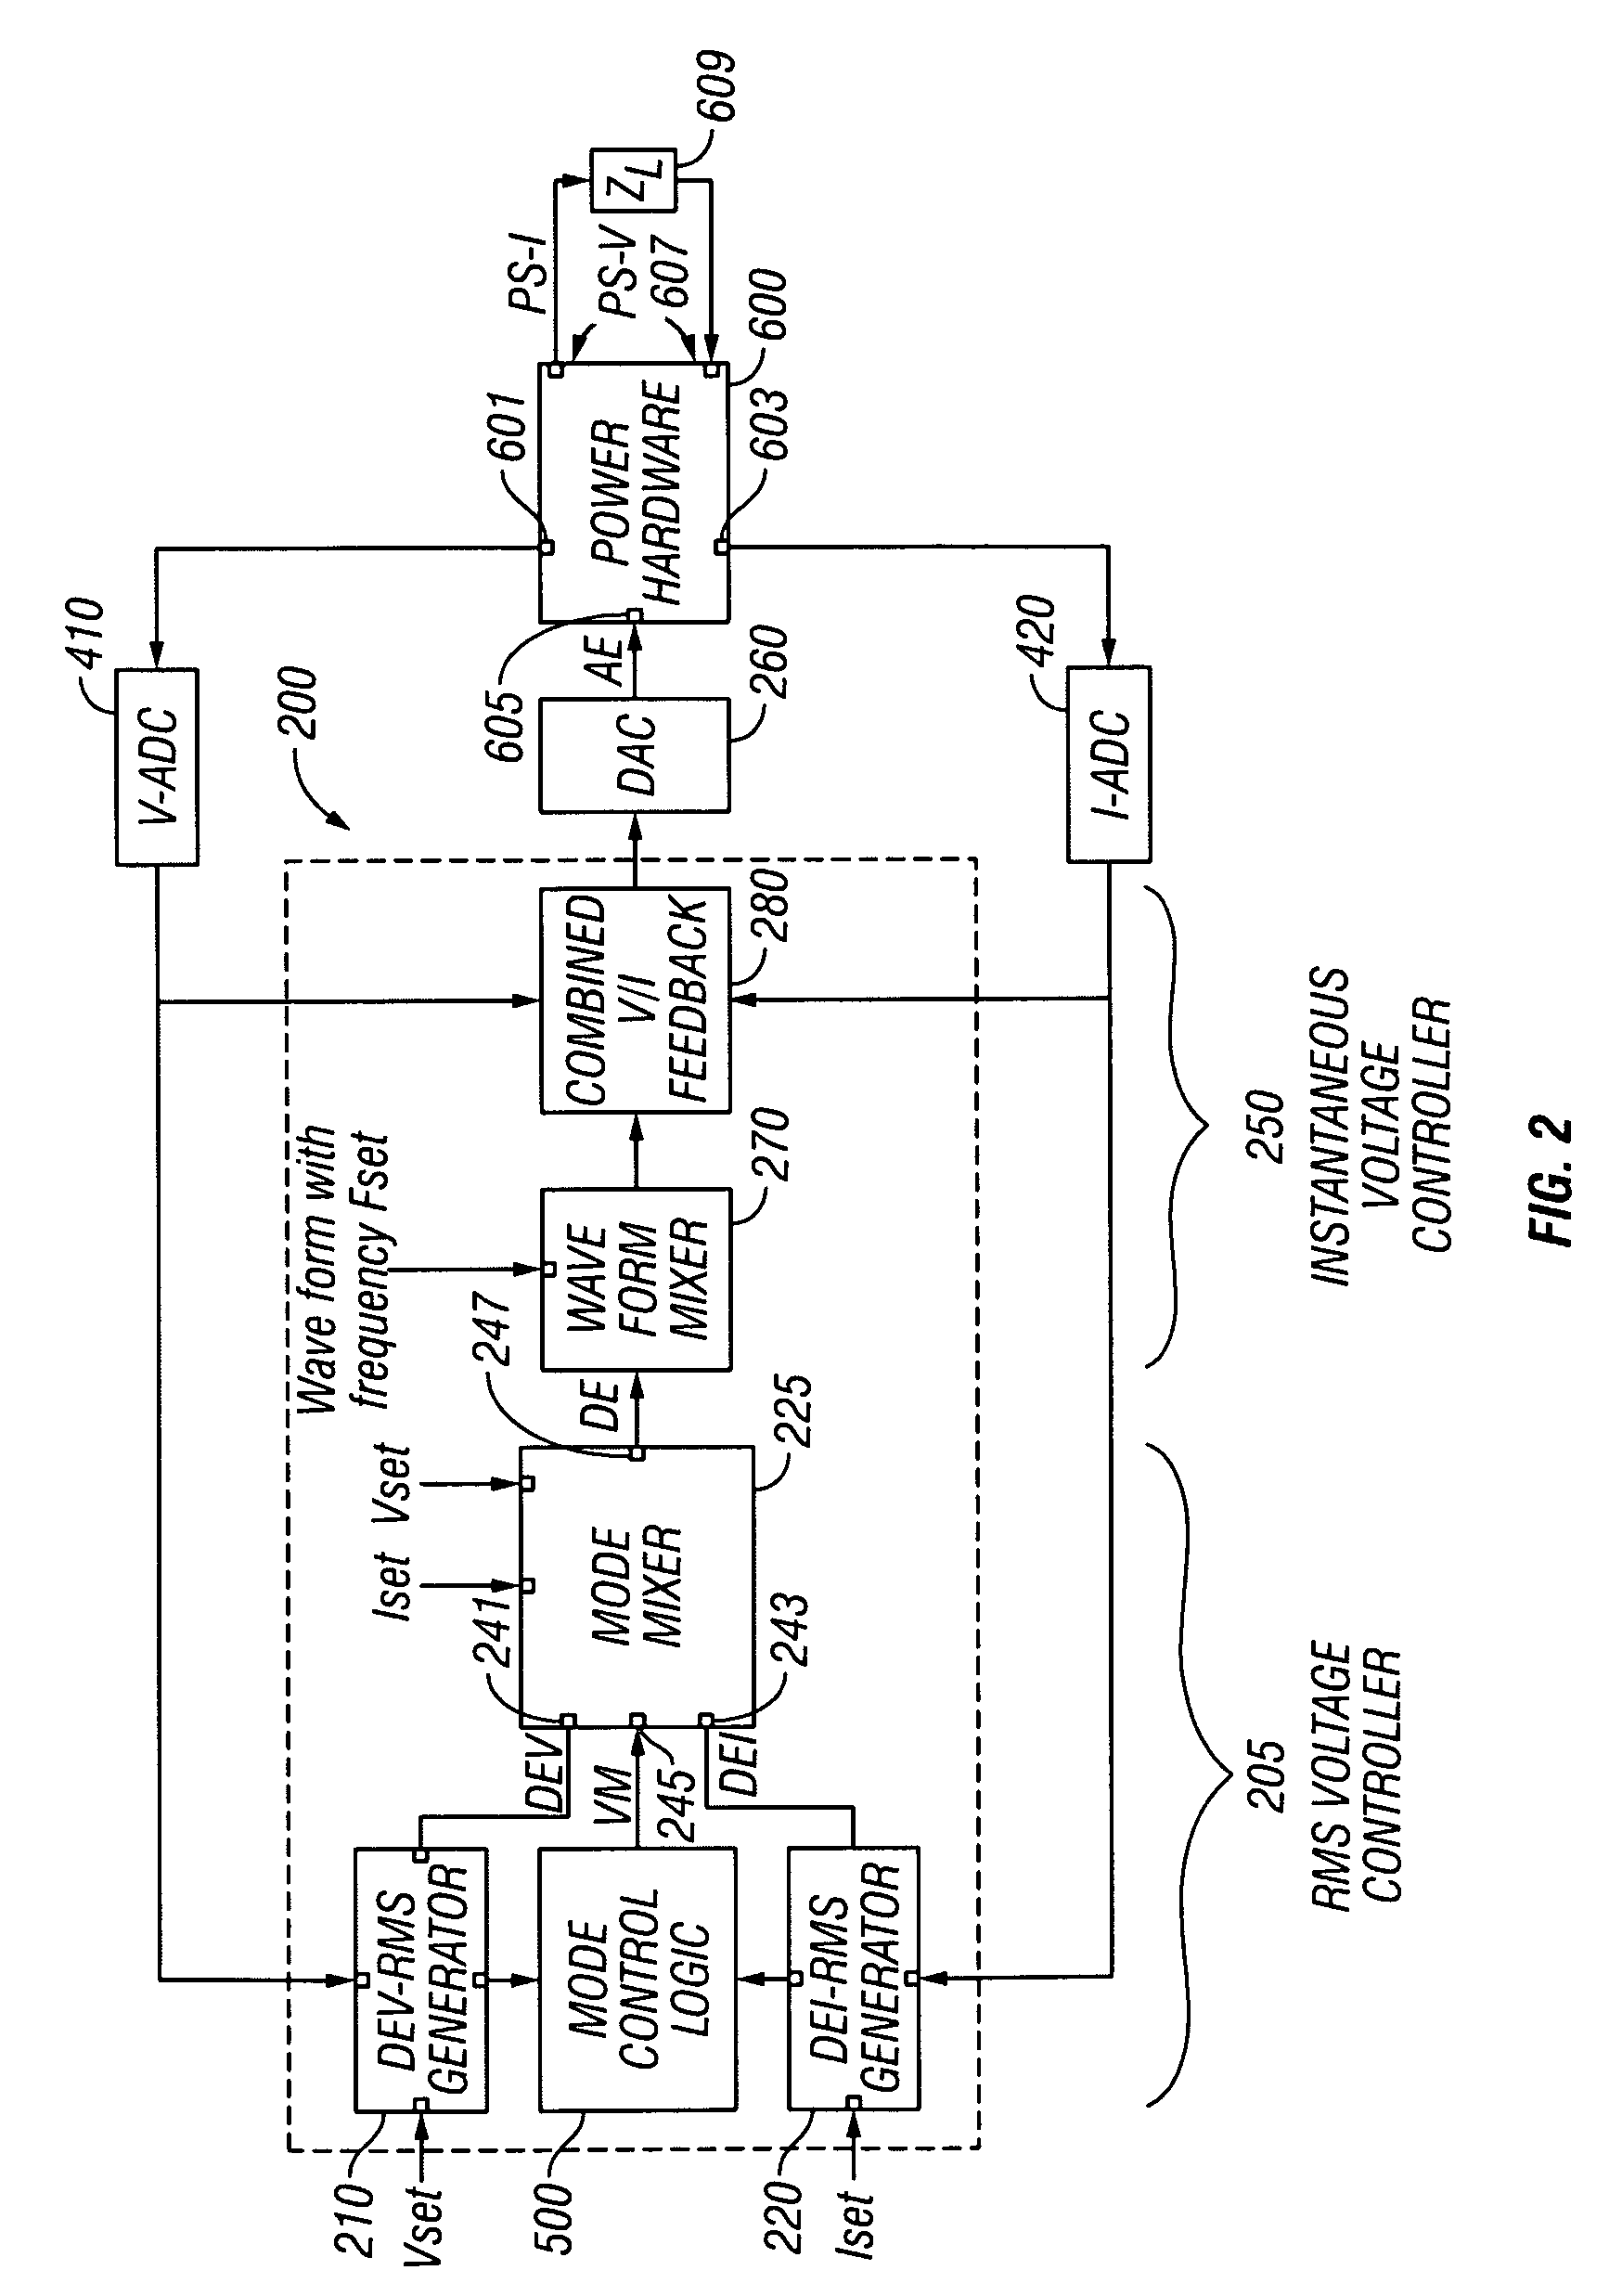 AC output power supply with digital feedback loop